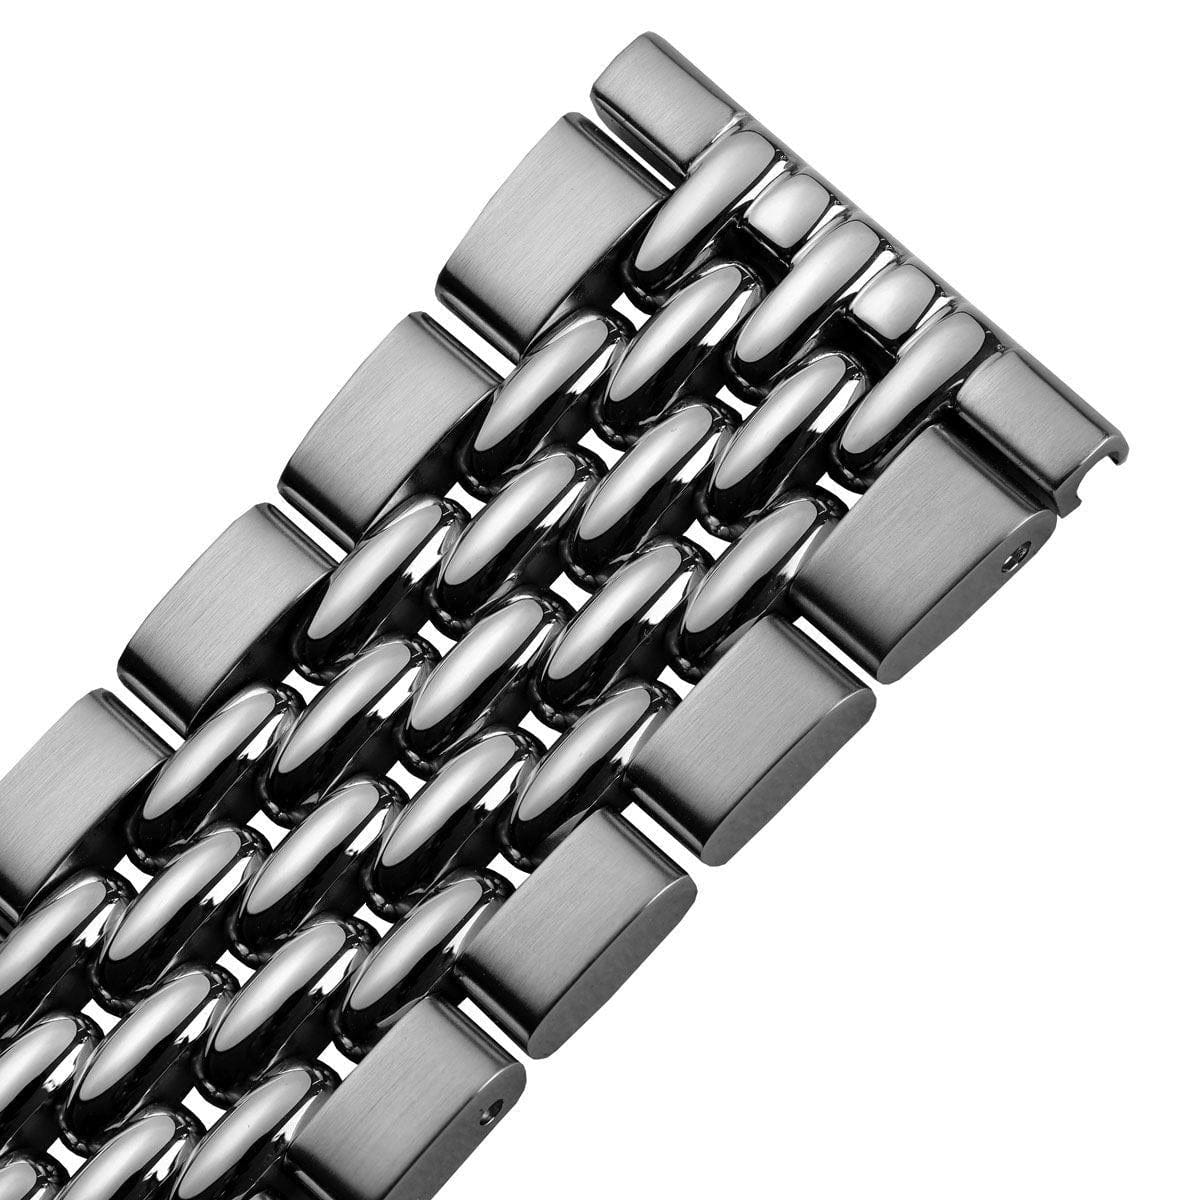 ZULUDIVER Beads of Rice Premium Watch Strap - Silver